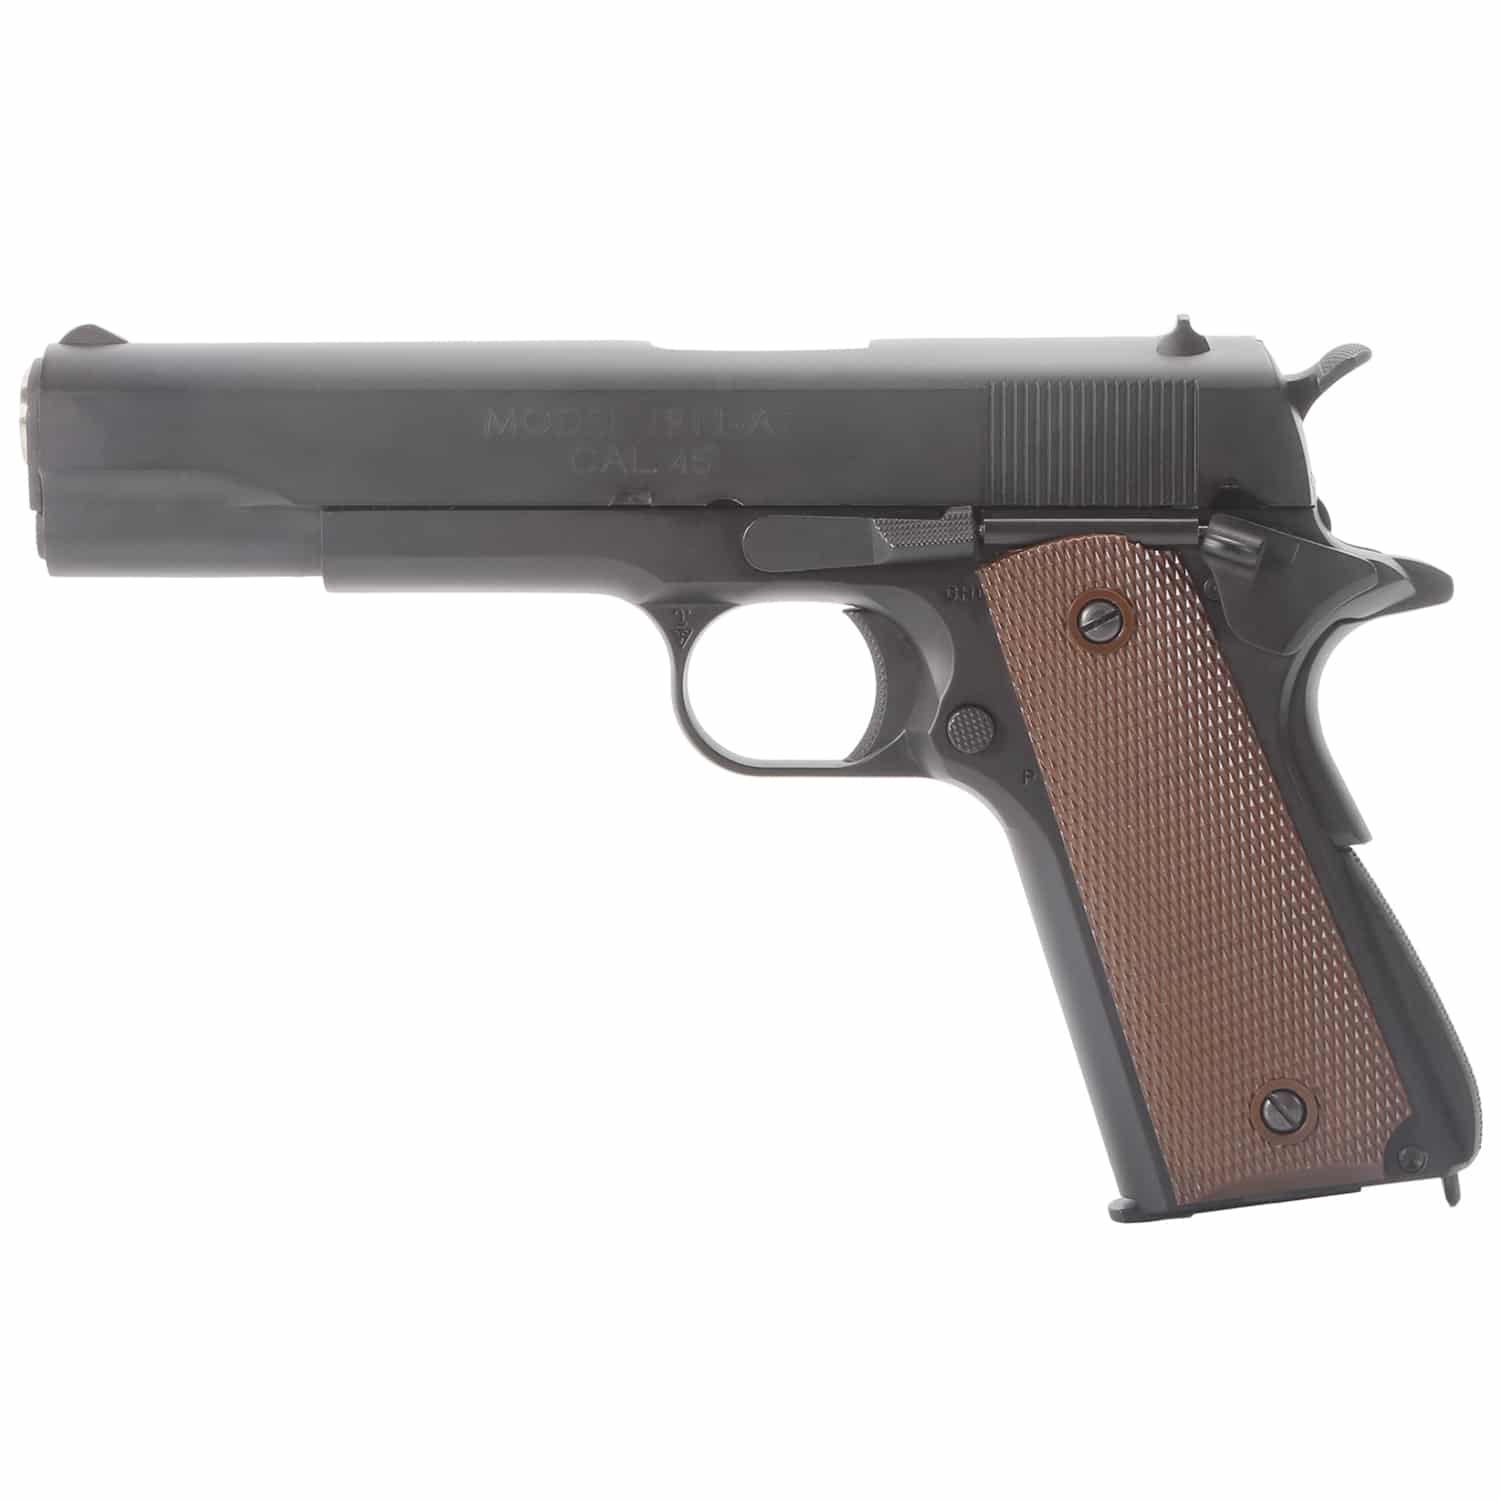 King Arms 1911 A1 GBB pistol